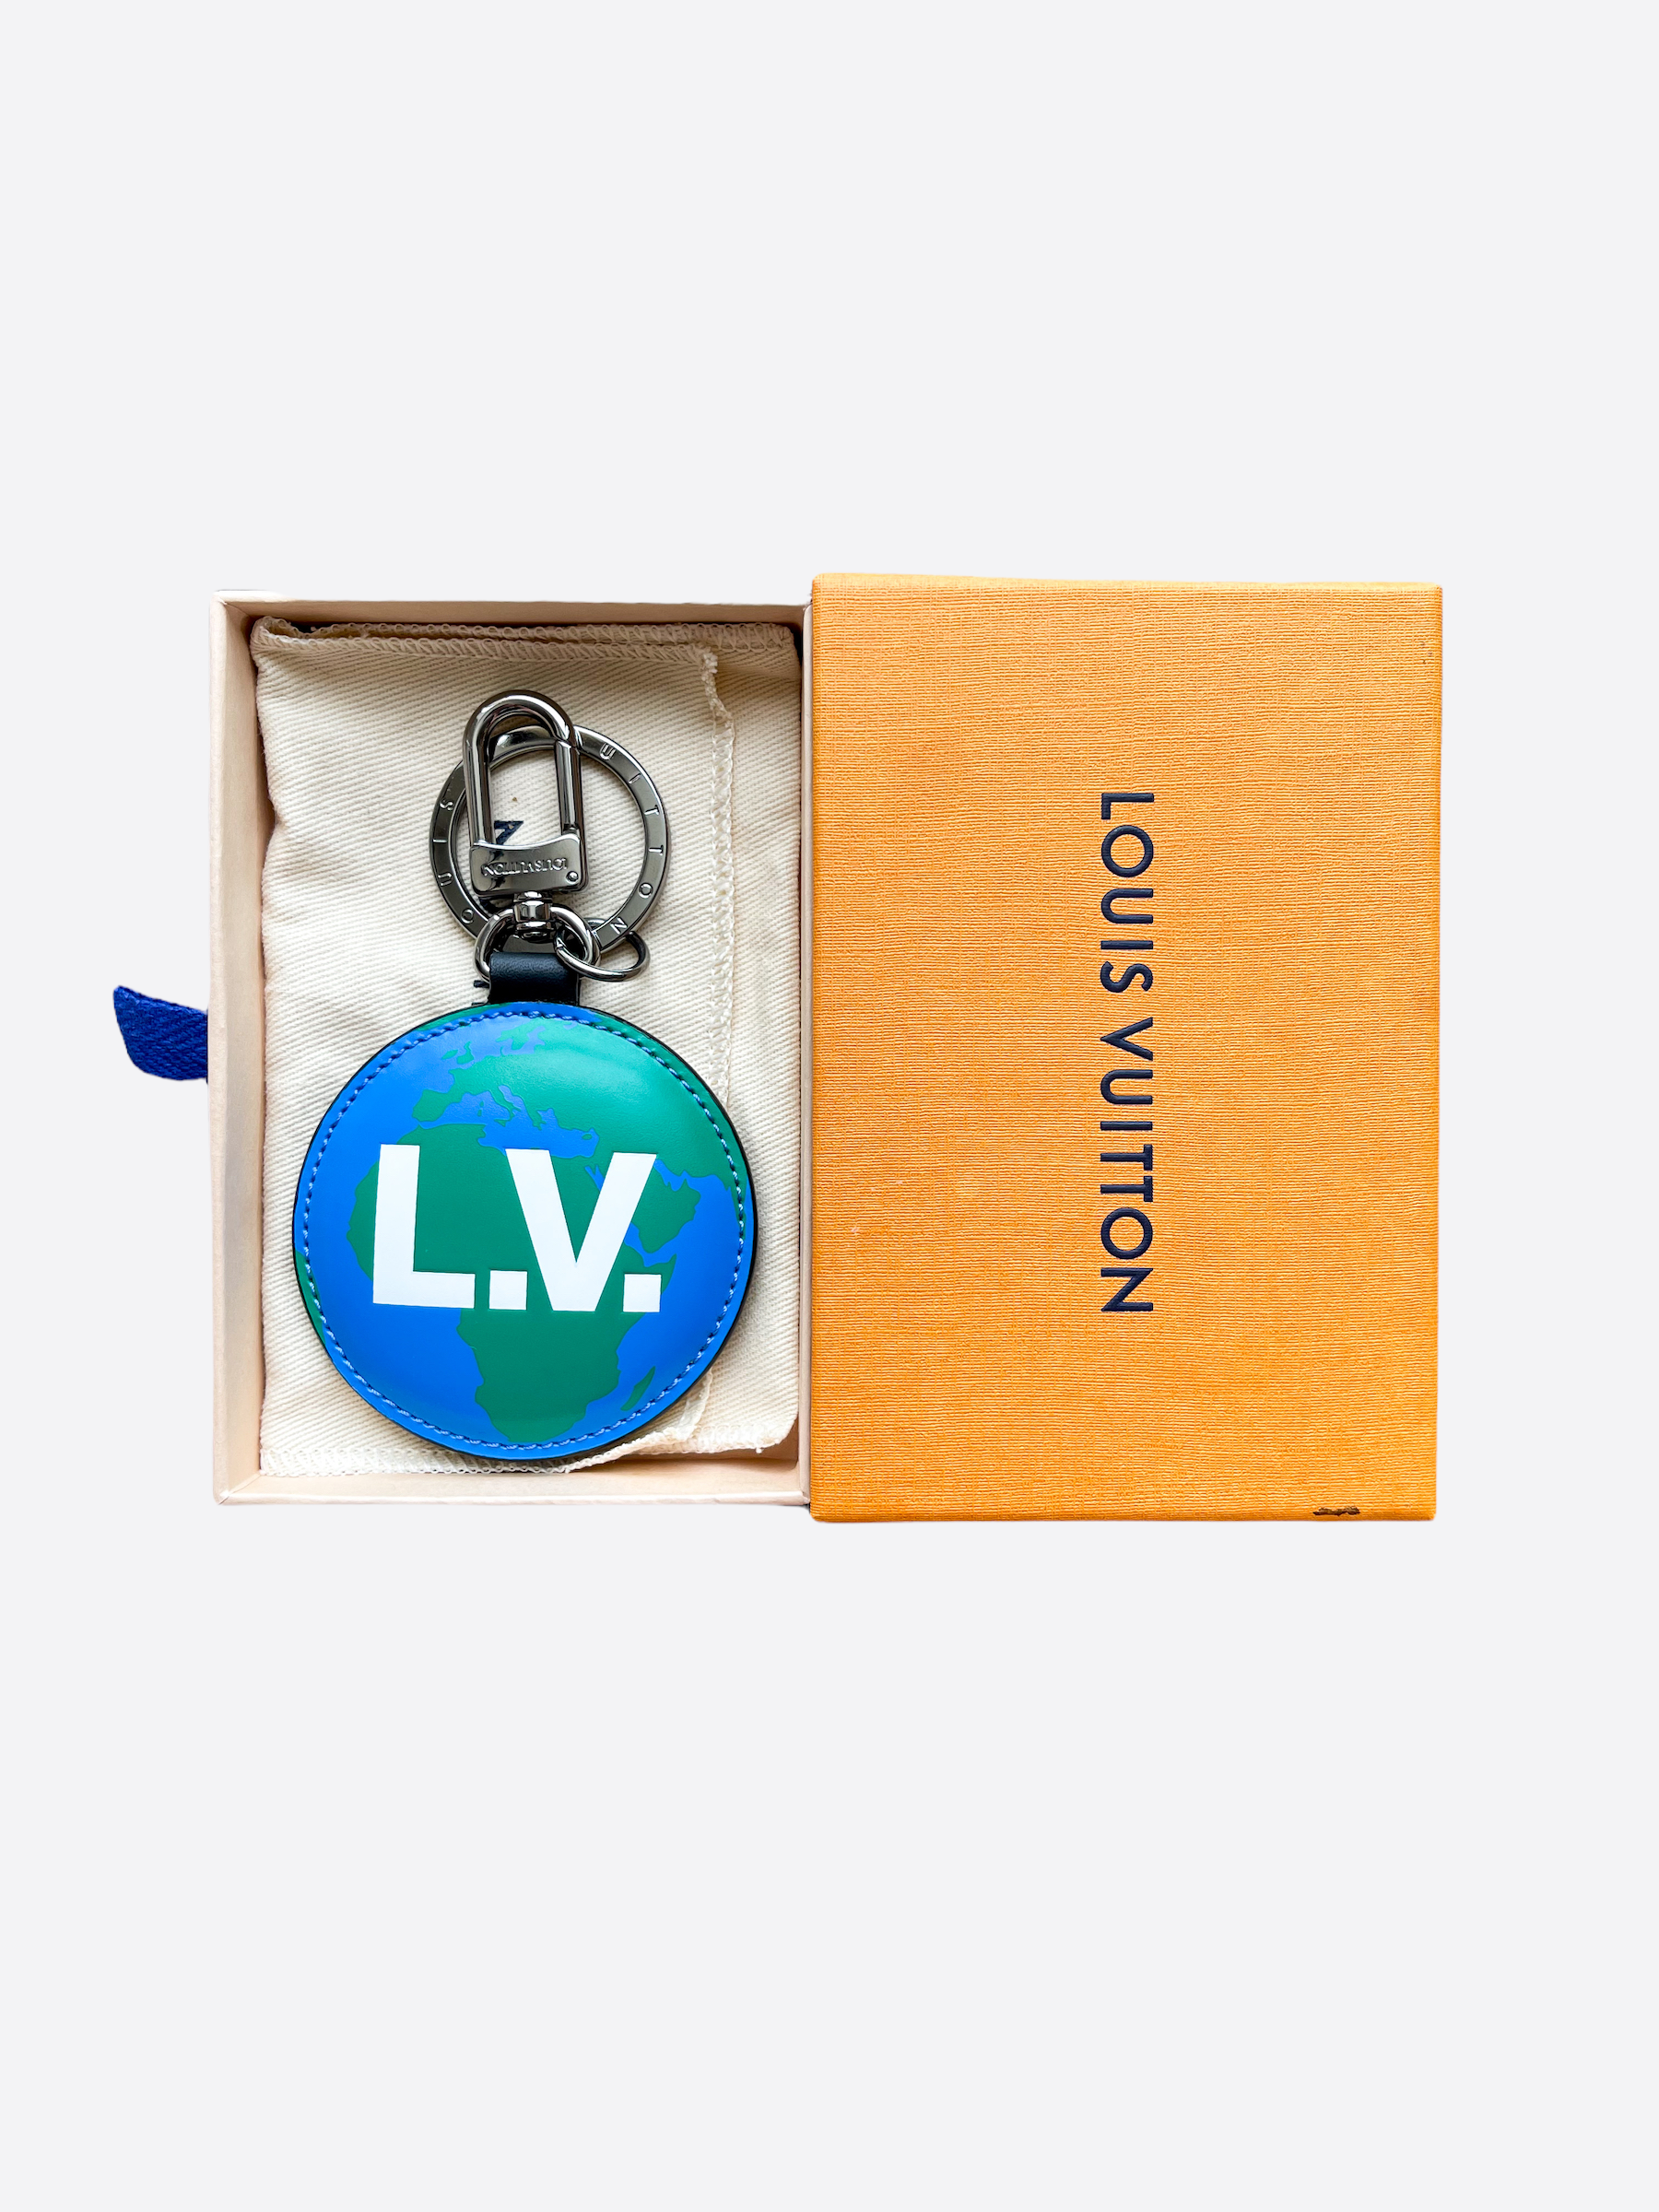 Louis Vuitton Monogram Denim Circle Bag Charm & Key Holder - Blue